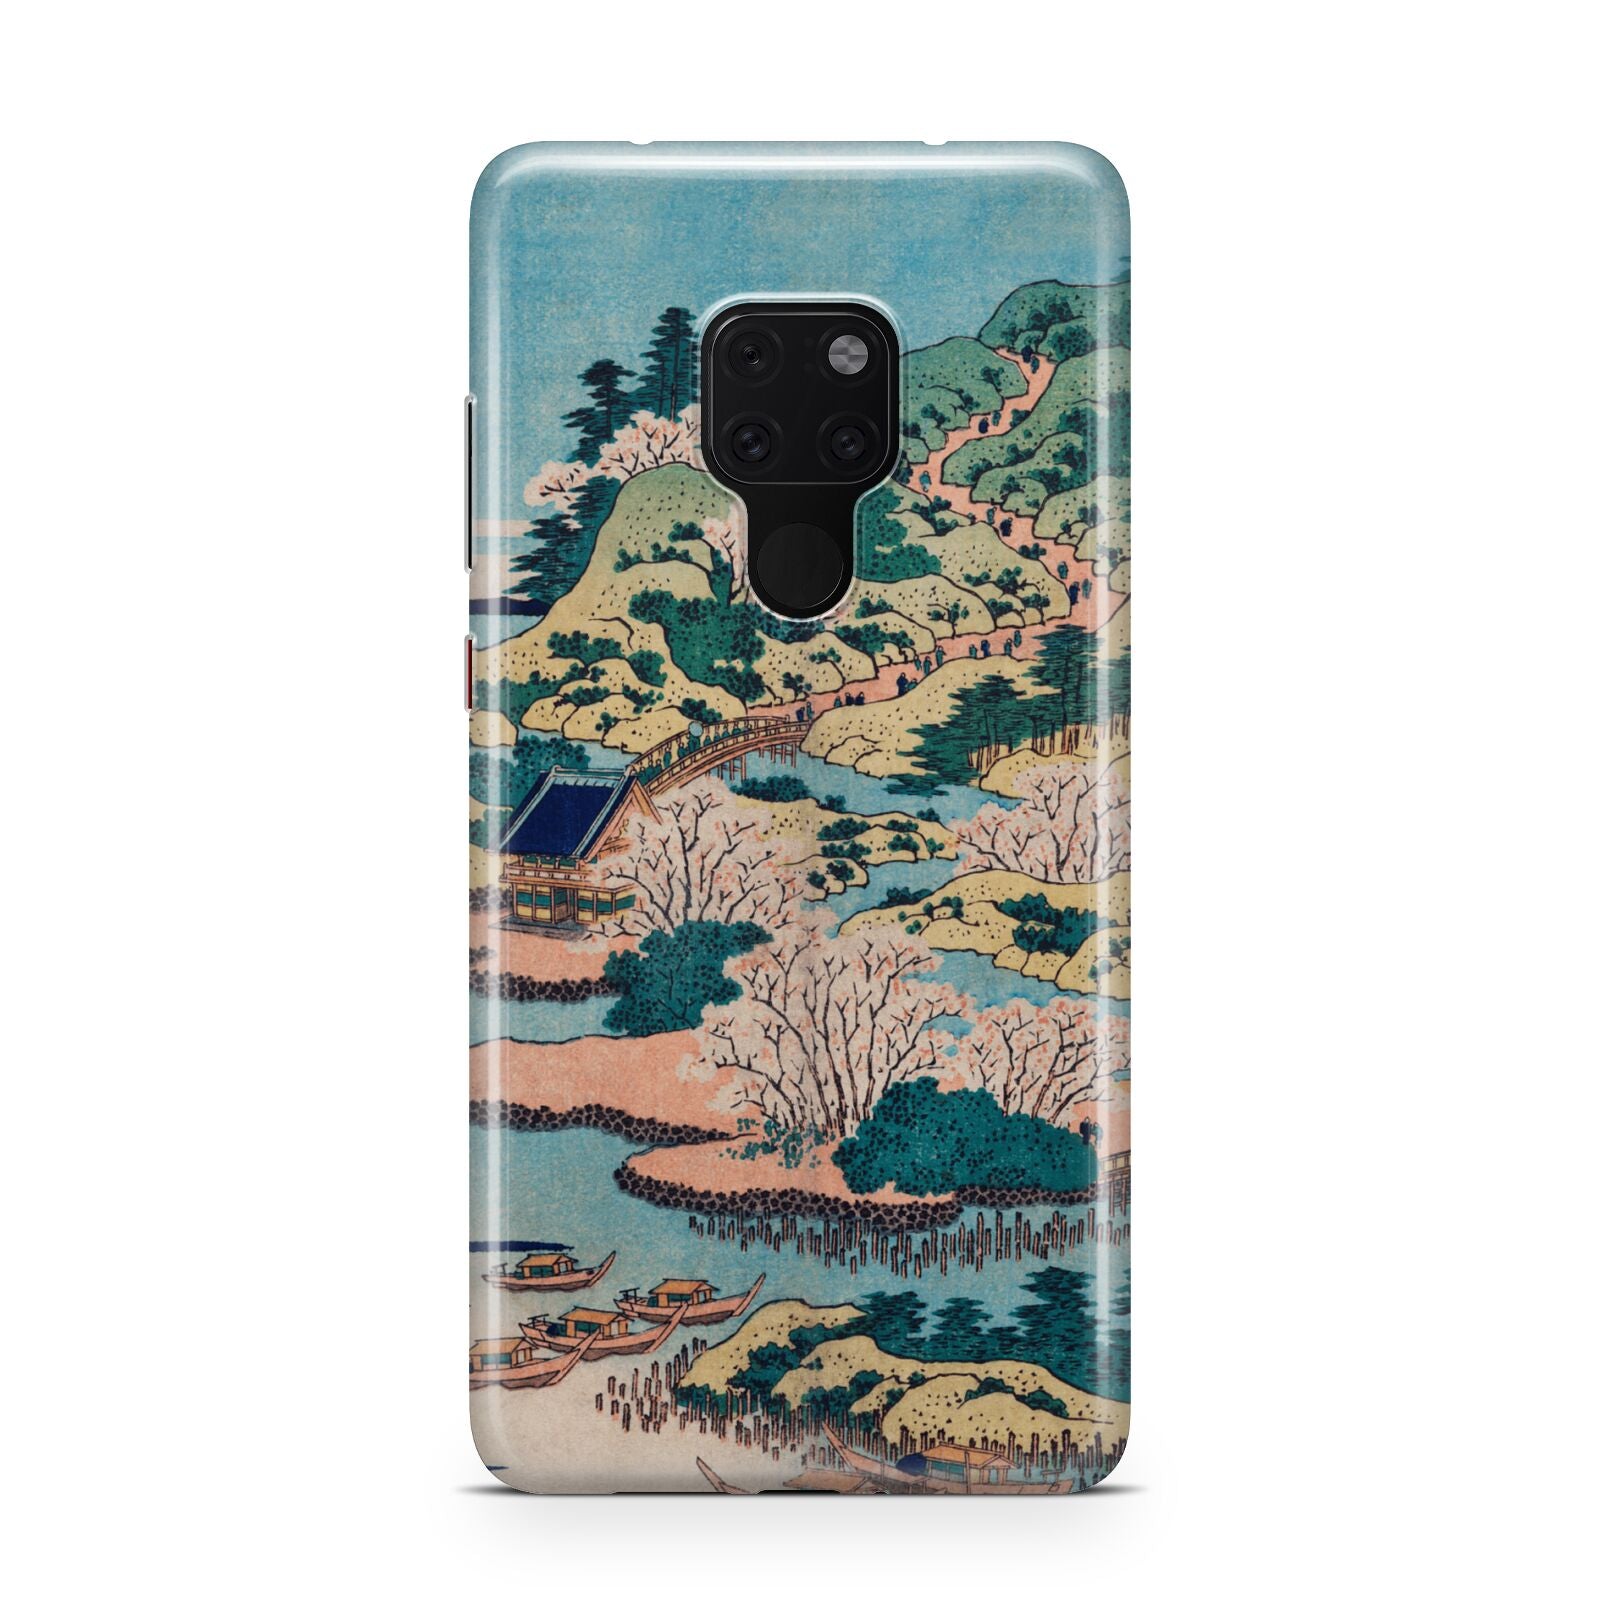 Coastal Community By Katsushika Hokusai Huawei Mate 20 Phone Case